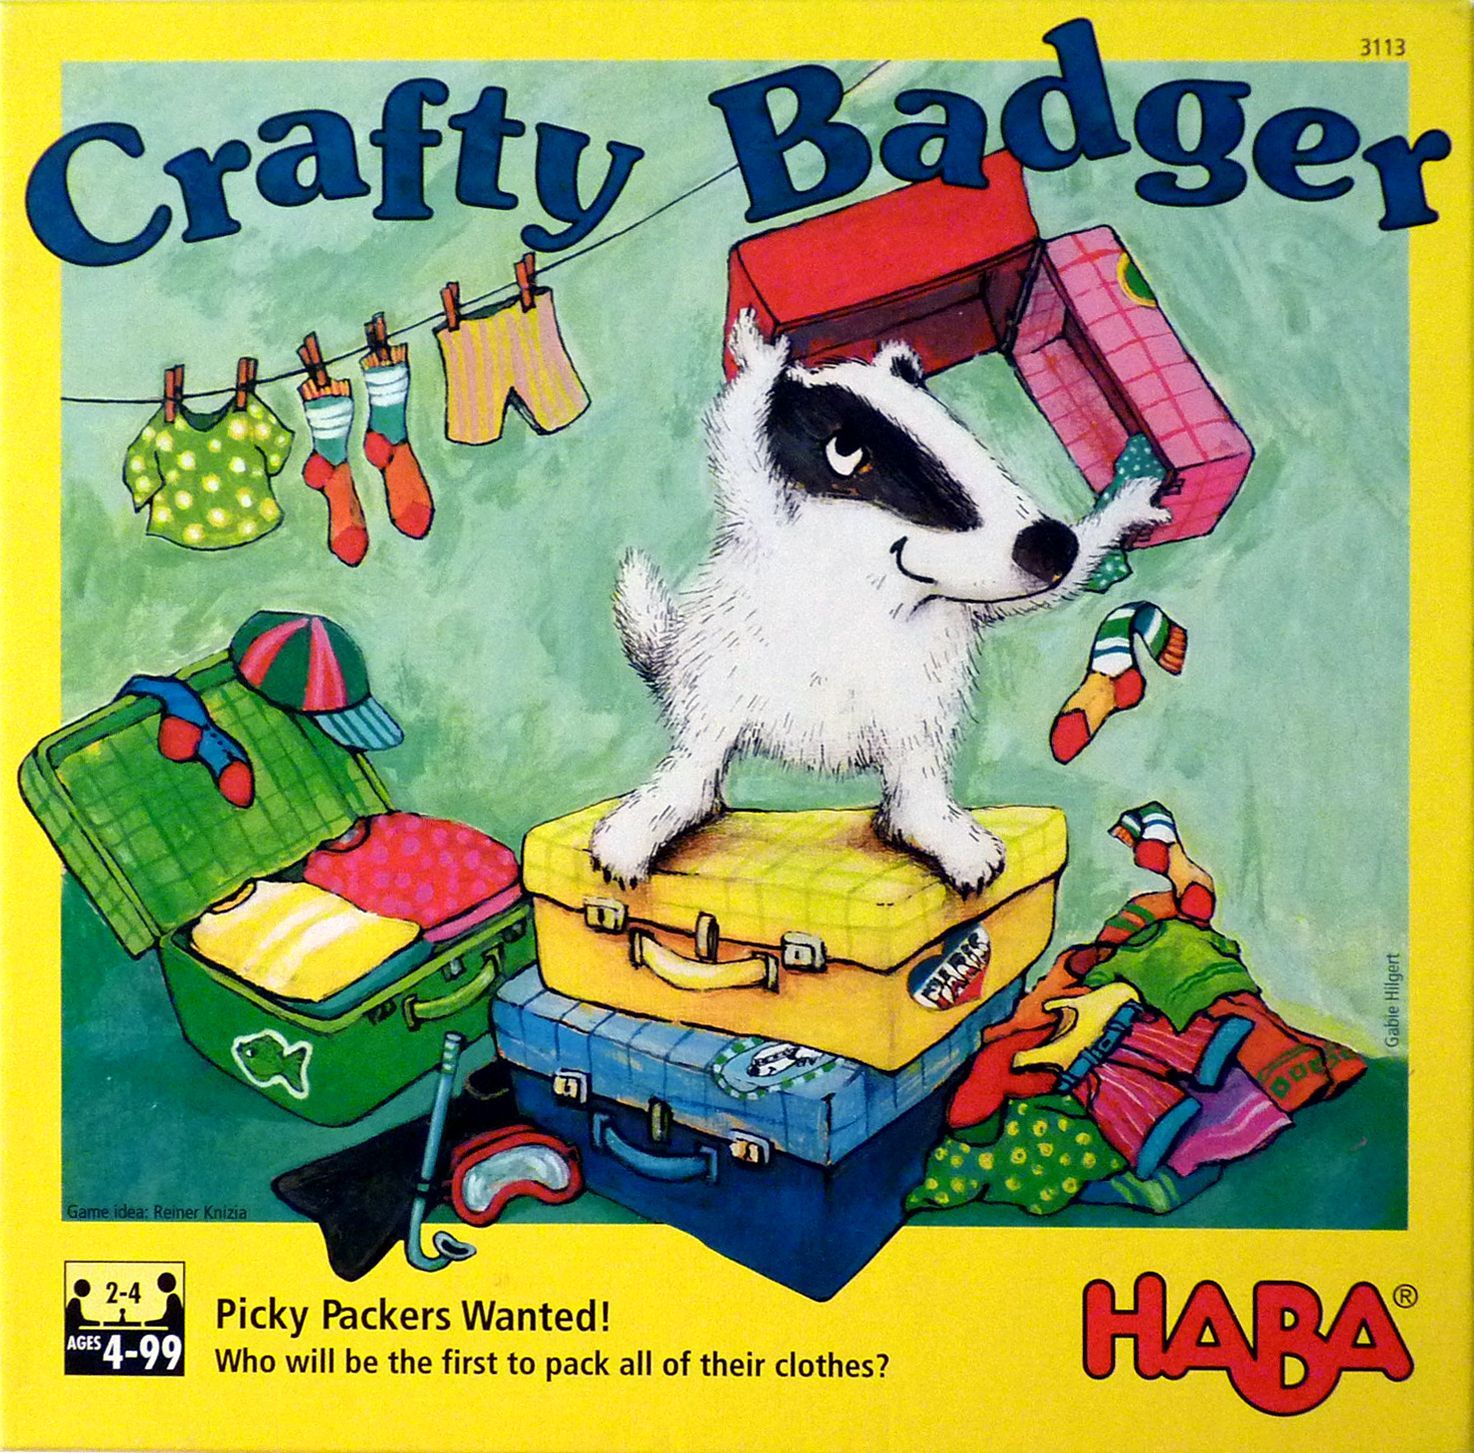 Crafty Badger